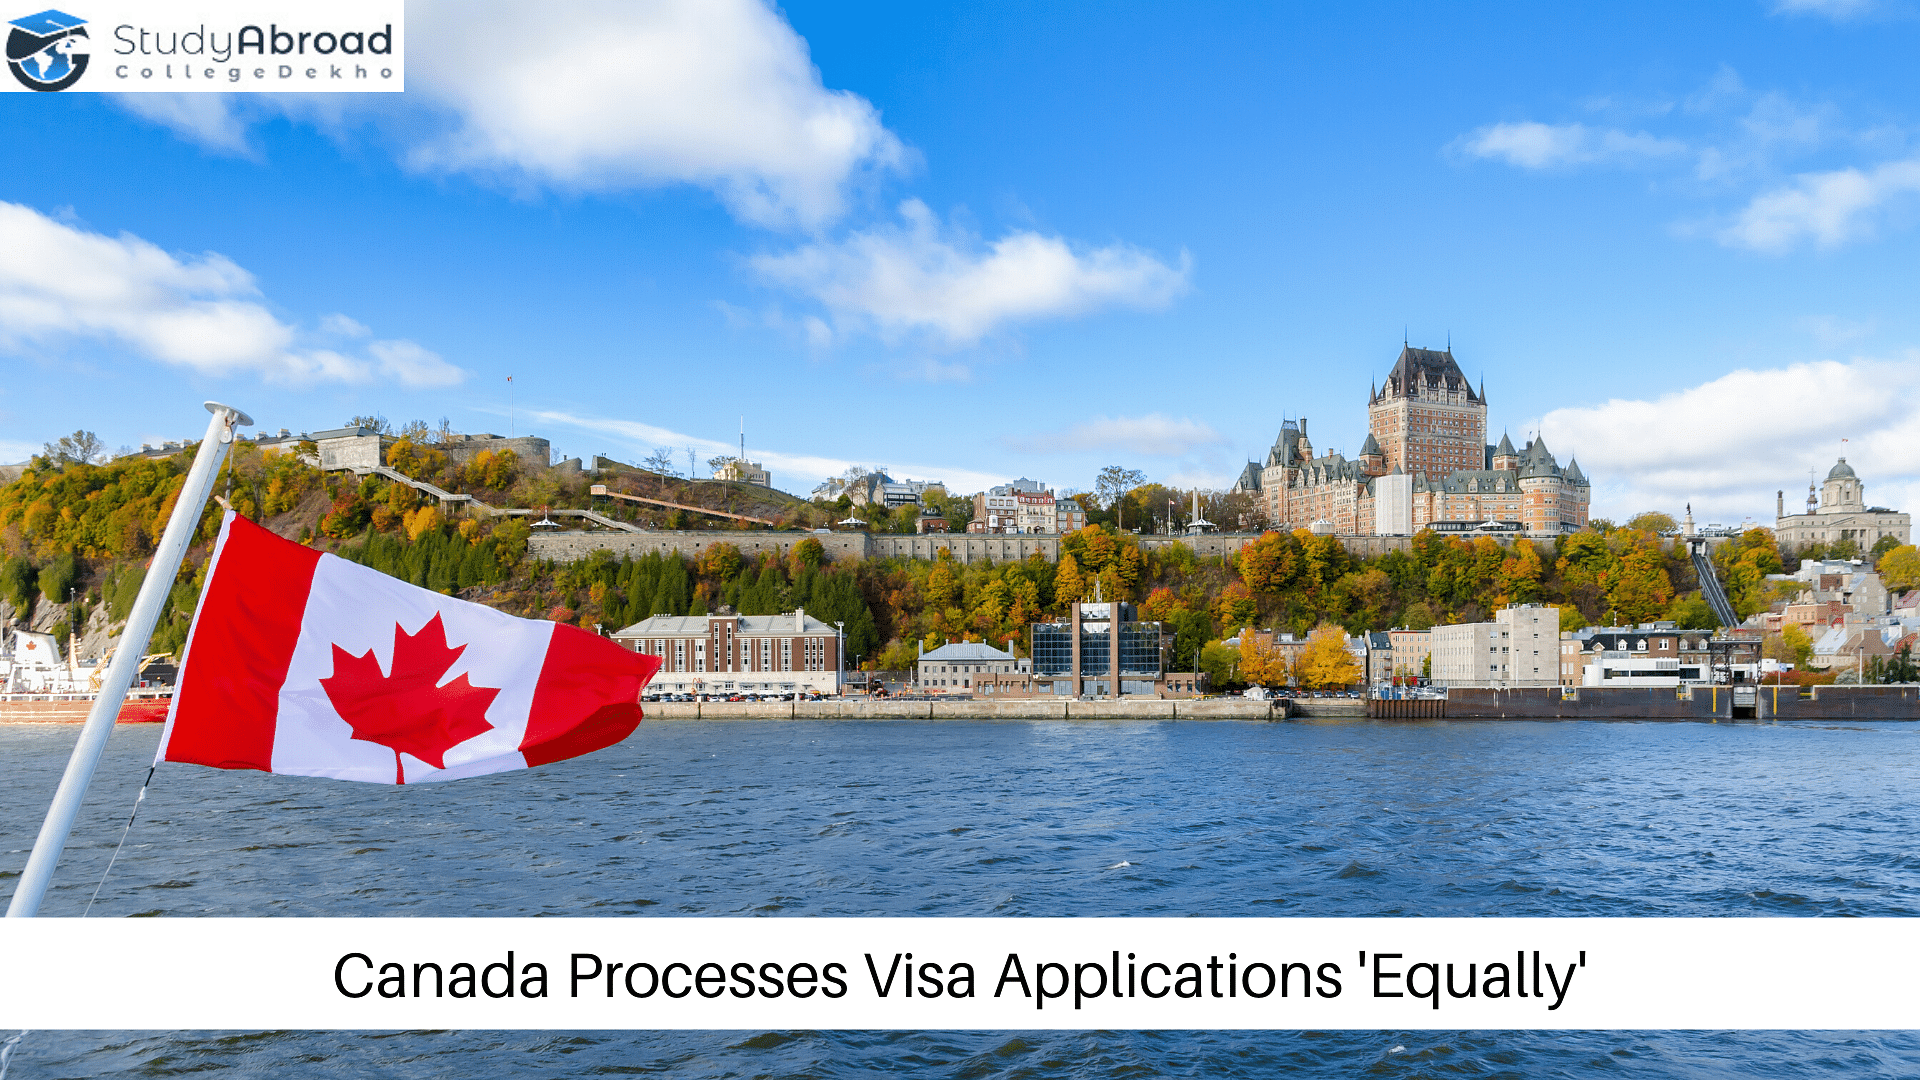 Canada Processes Visa Applications 'Equally'